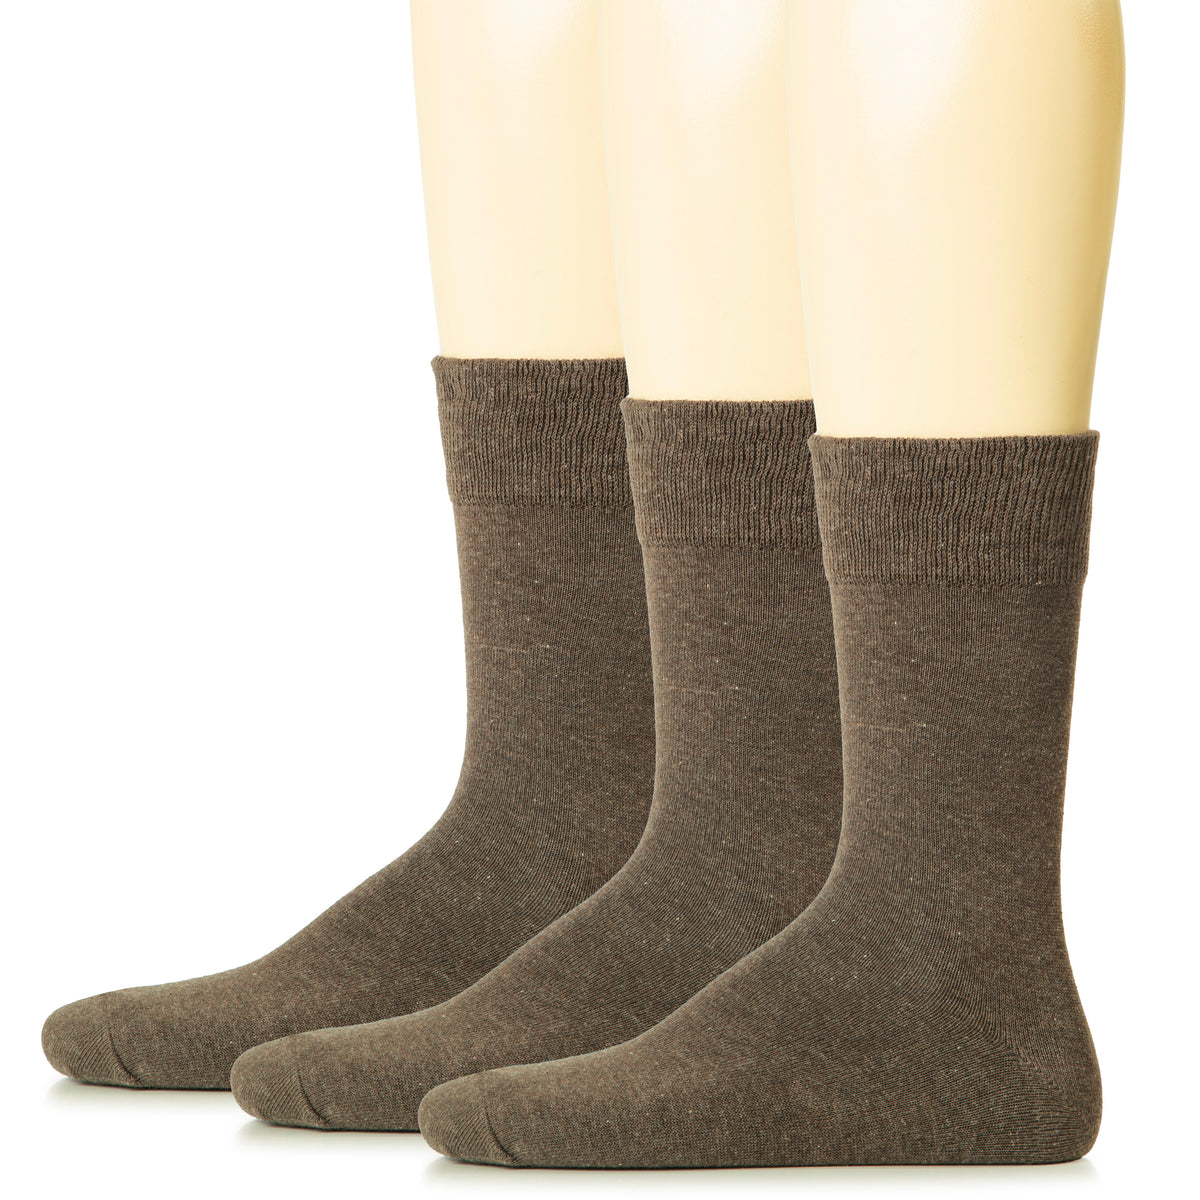 Hugh Ugoli Men Cotton Dress Socks XL / L / M / S Sizes, 3 Pairs | Shoe Size:10-13 | Dark Beige